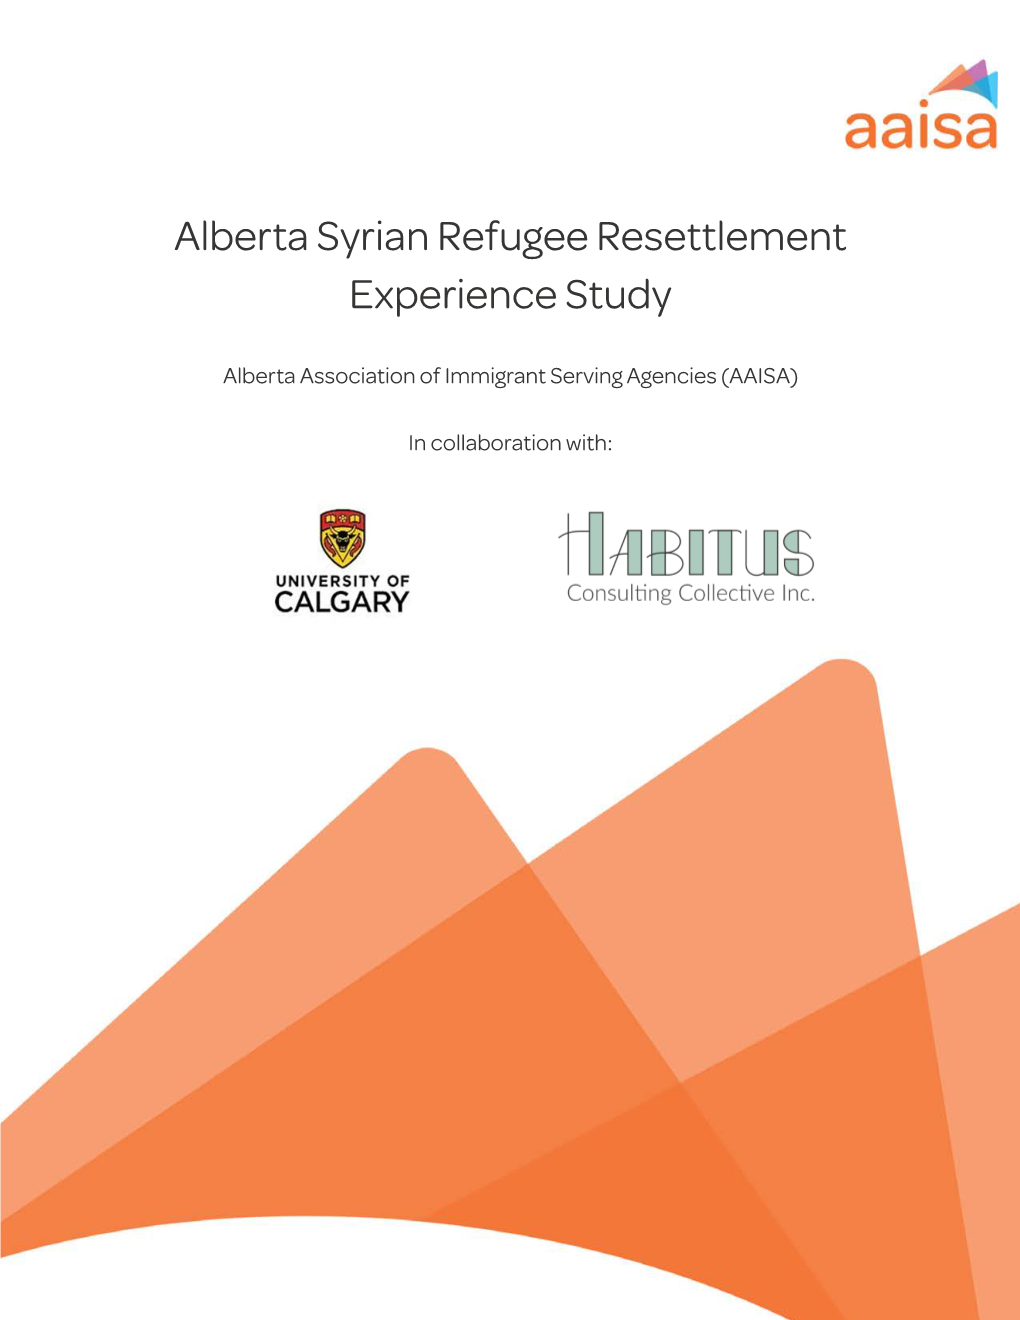 Alberta Syrian Refugee Resettlement Experience: AAISA STUDY